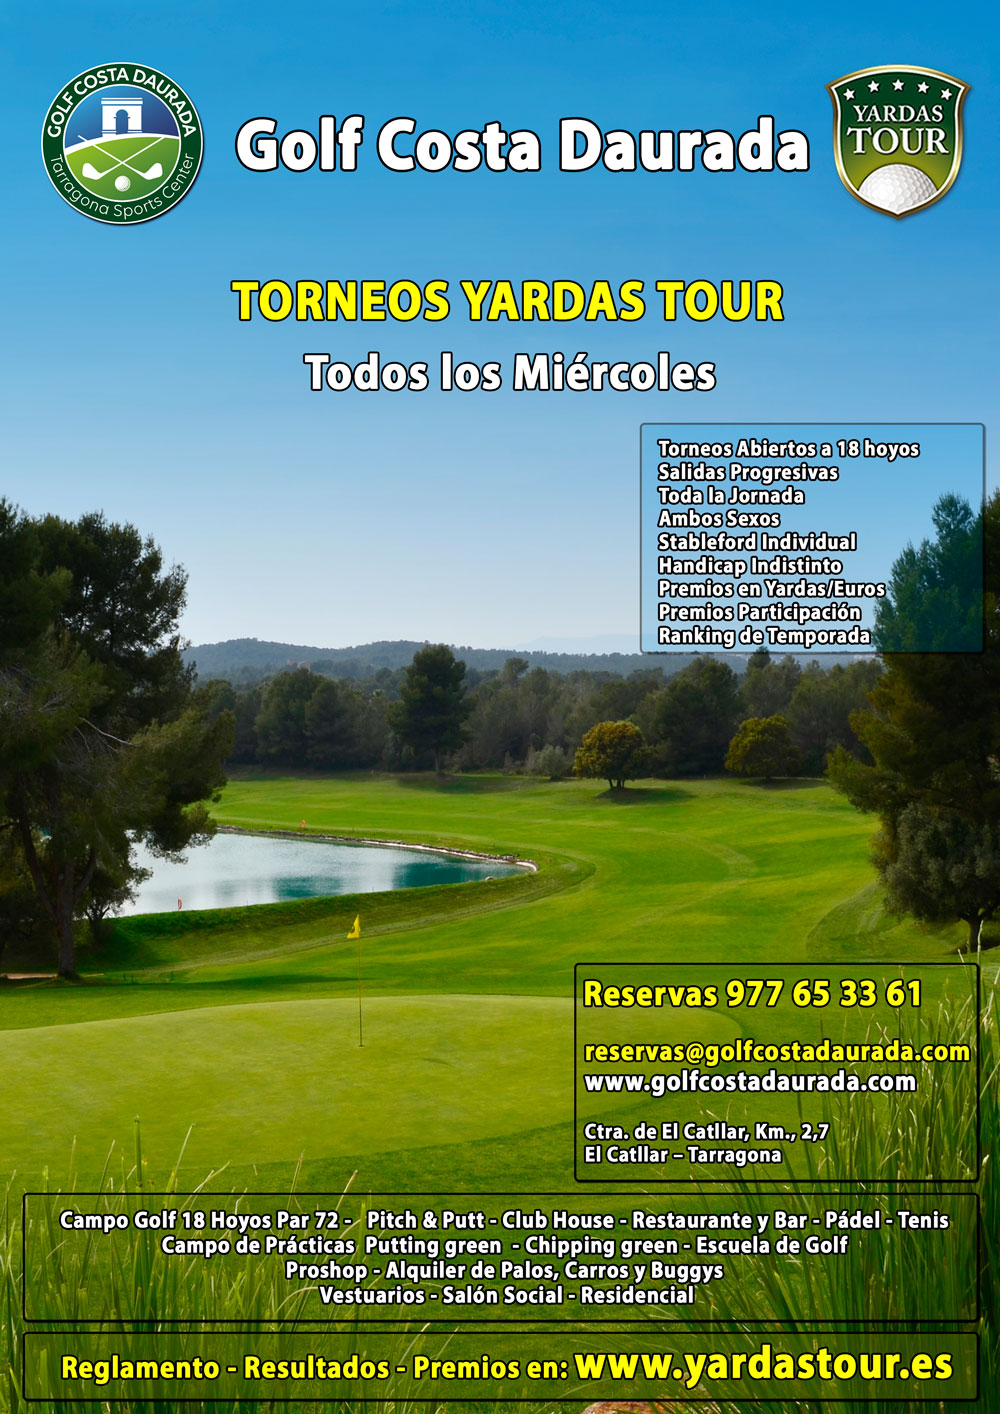 Torneos Yardas Tour Classic - Golf Costa daurada